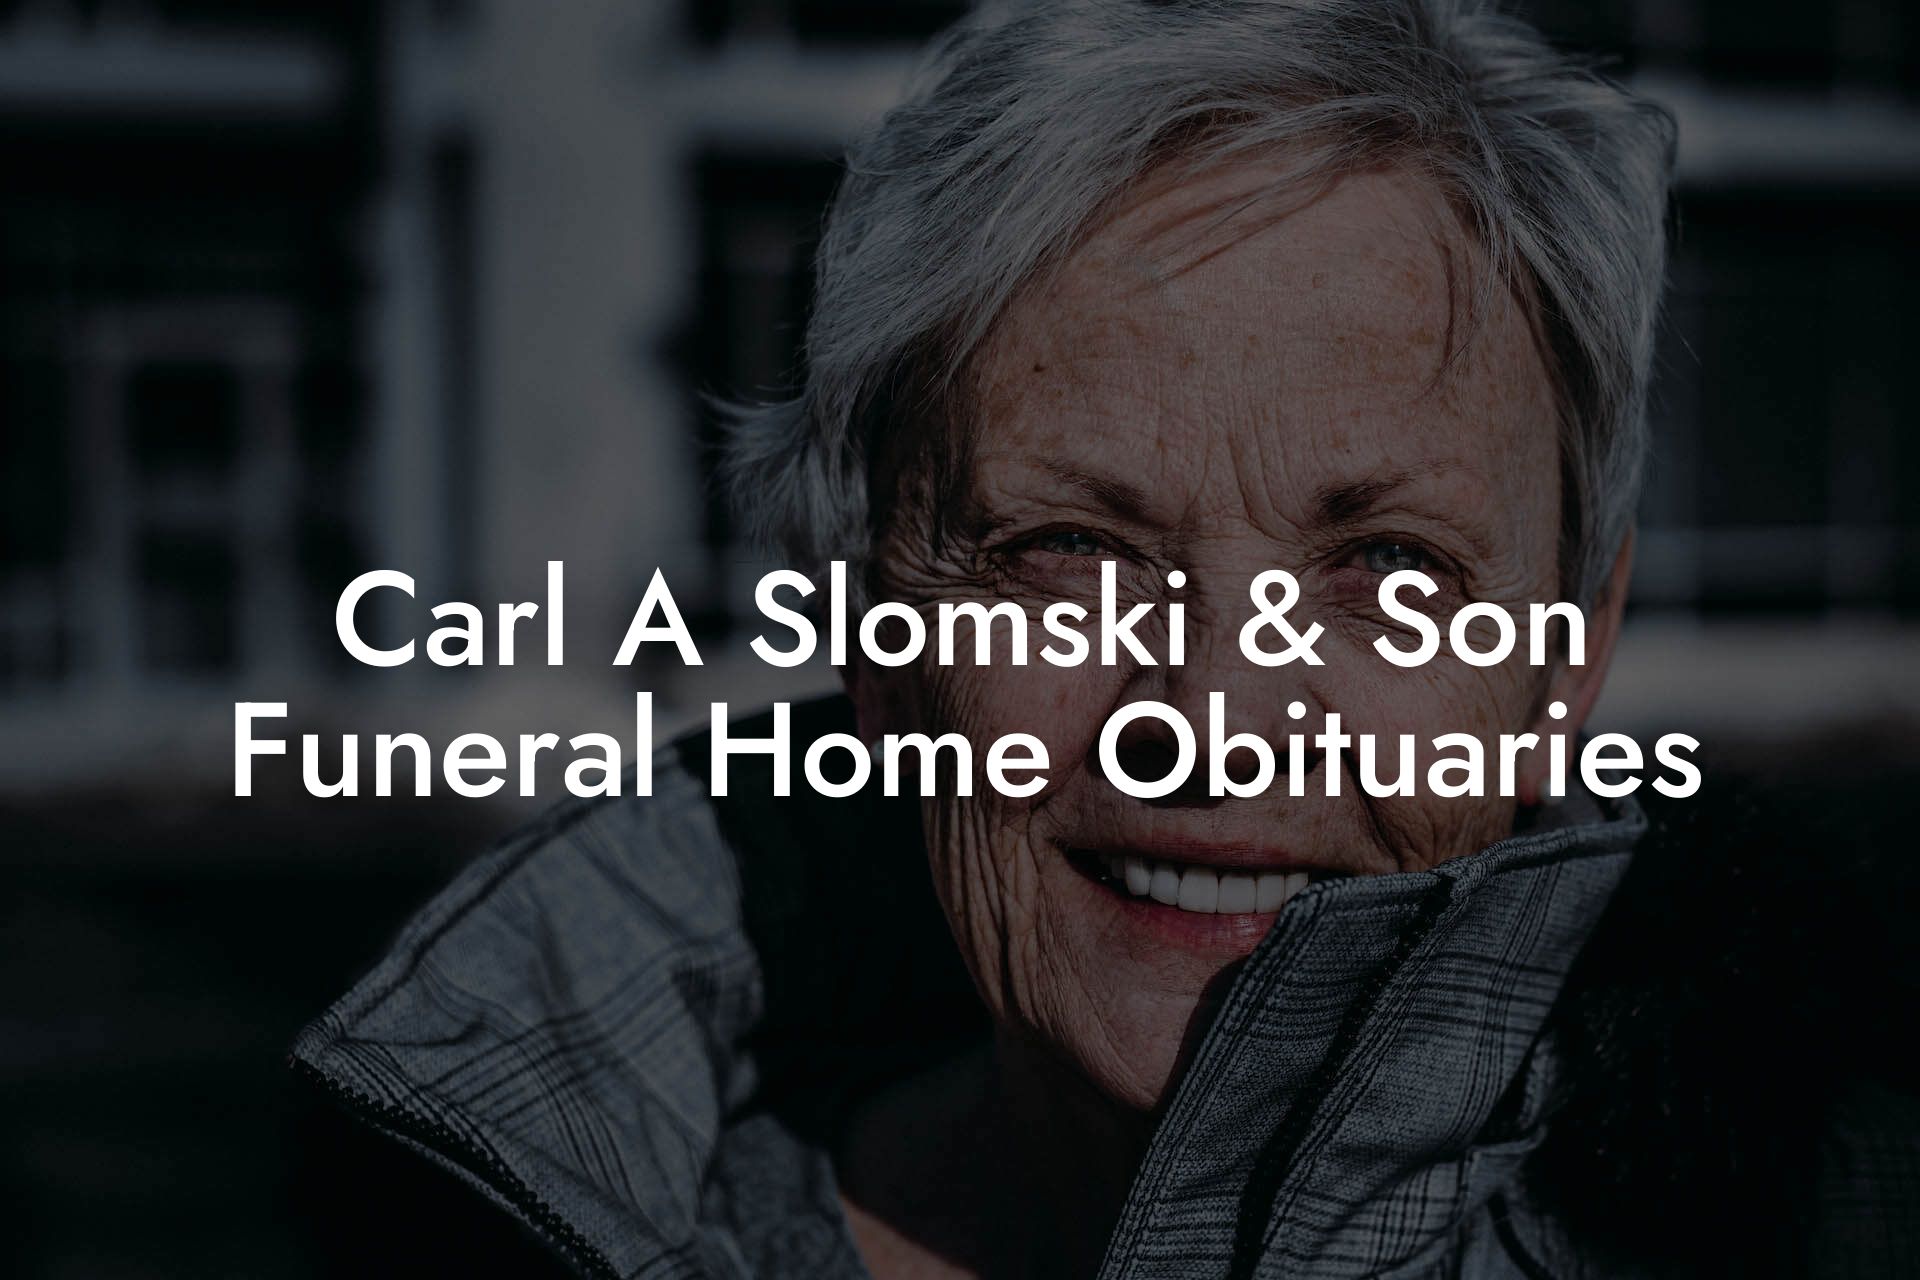 Carl A Slomski & Son Funeral Home Obituaries